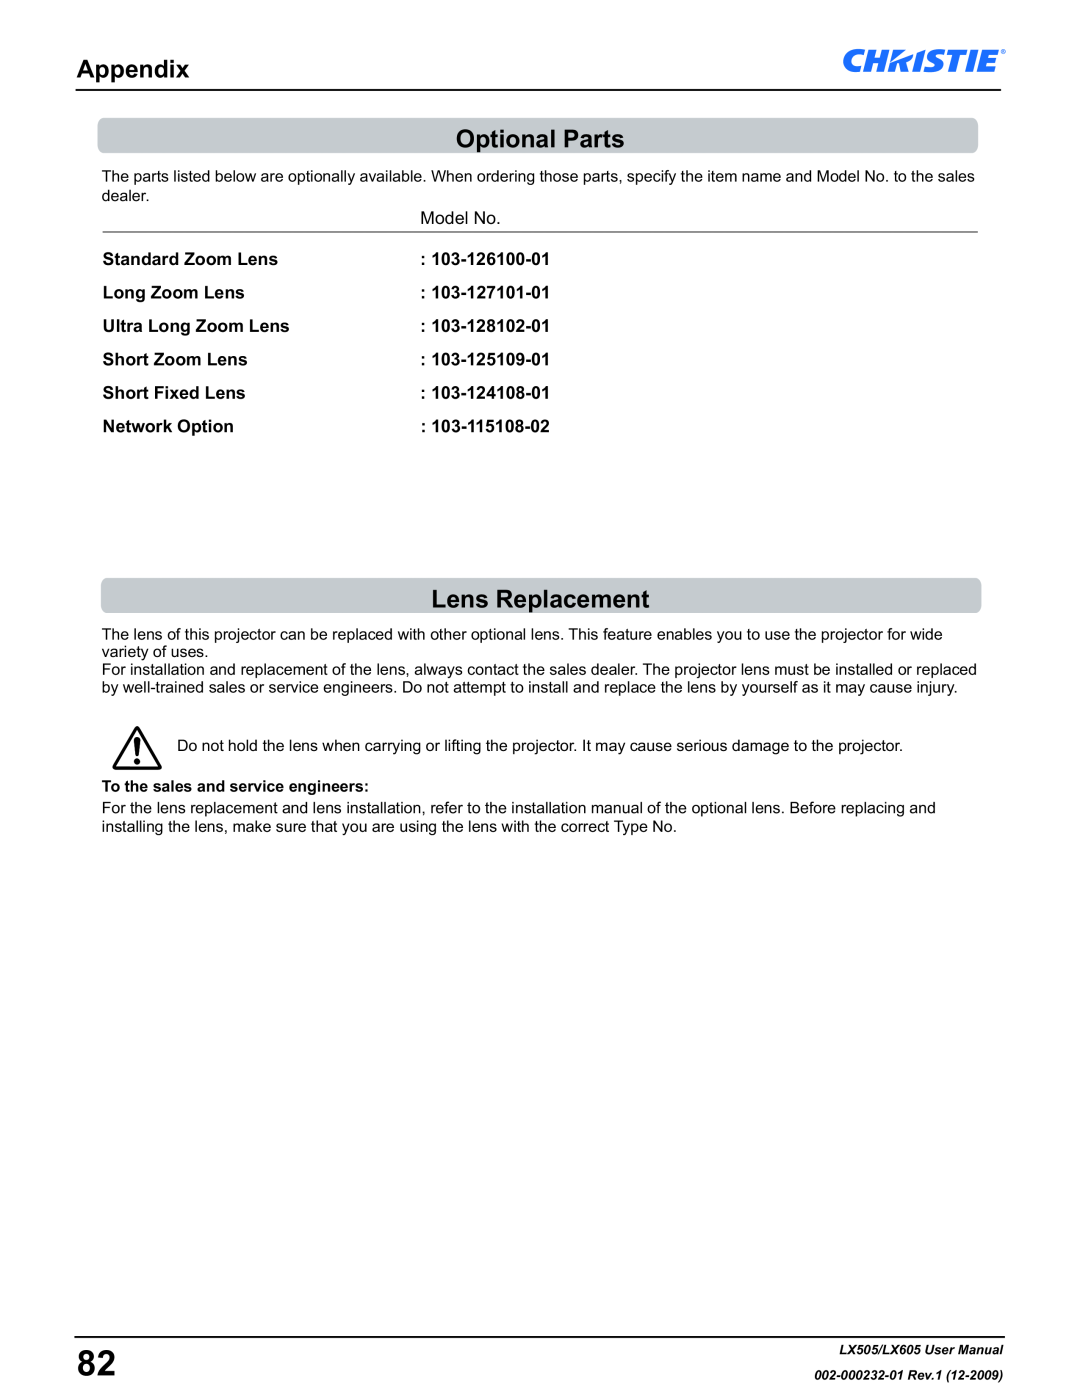 Christie Digital Systems LX605 manual Appendix Optional Parts, Lens Replacement 